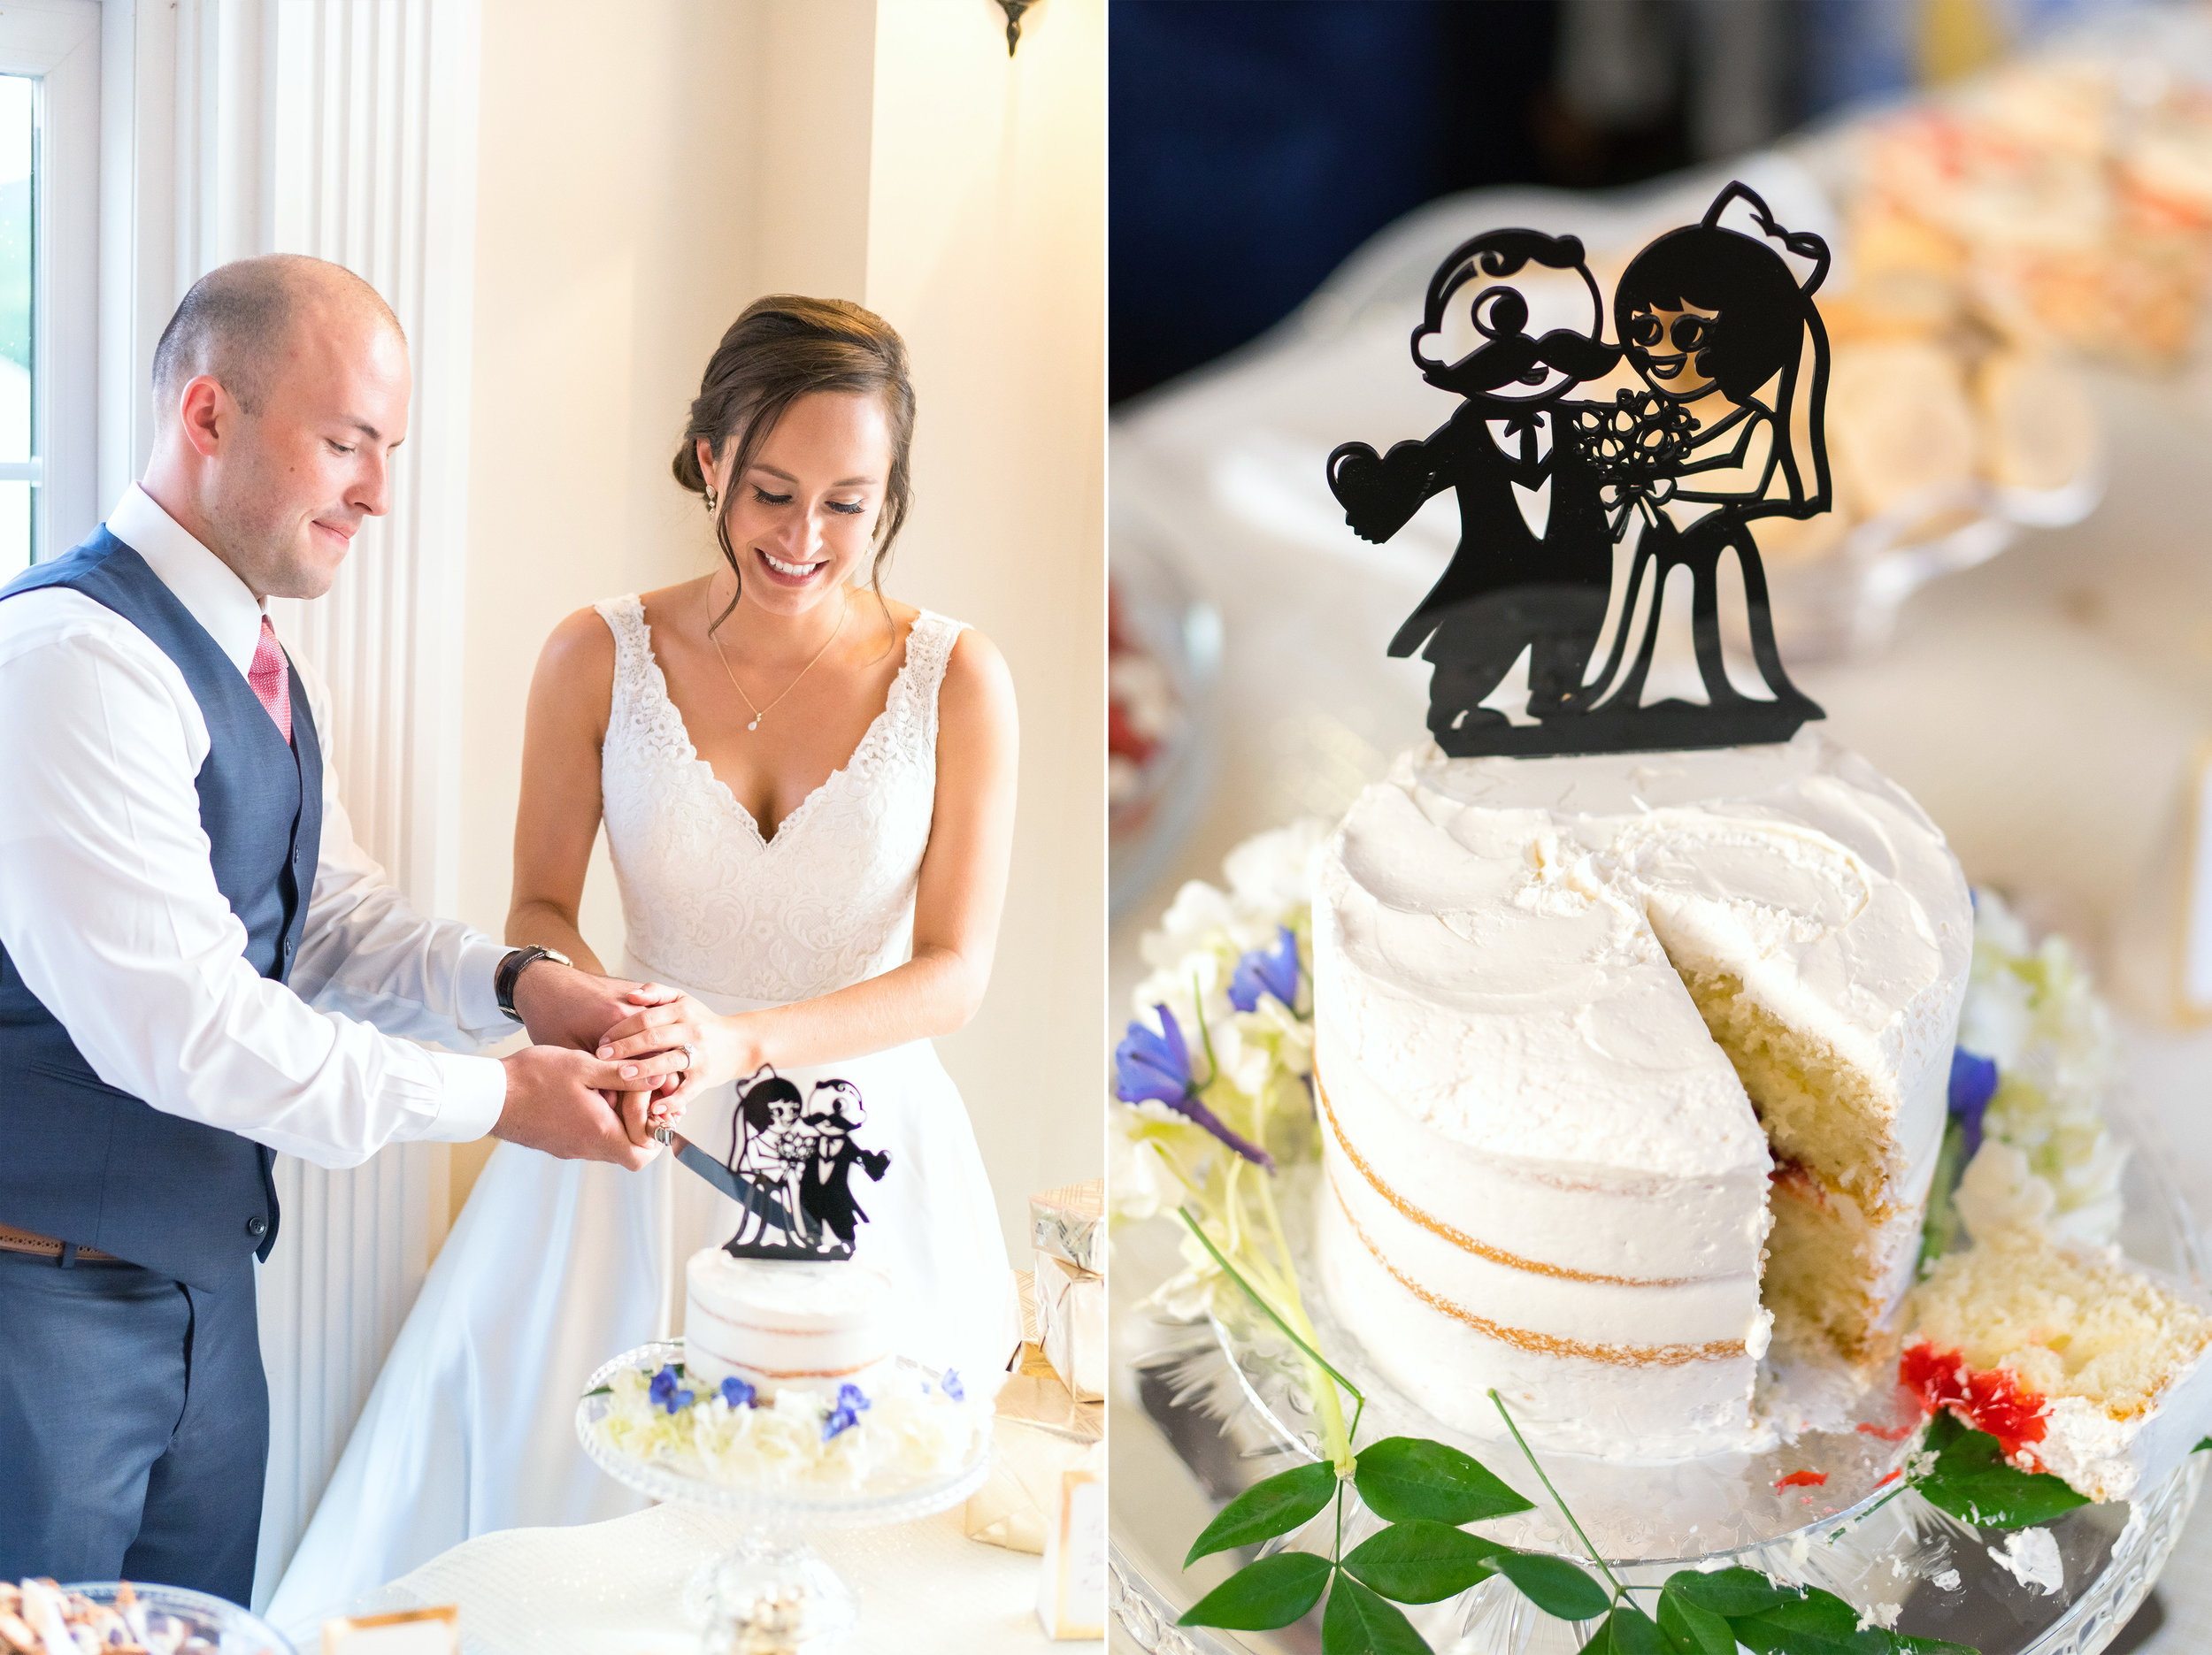 Cake cutting at beautiful maryland wedding venue